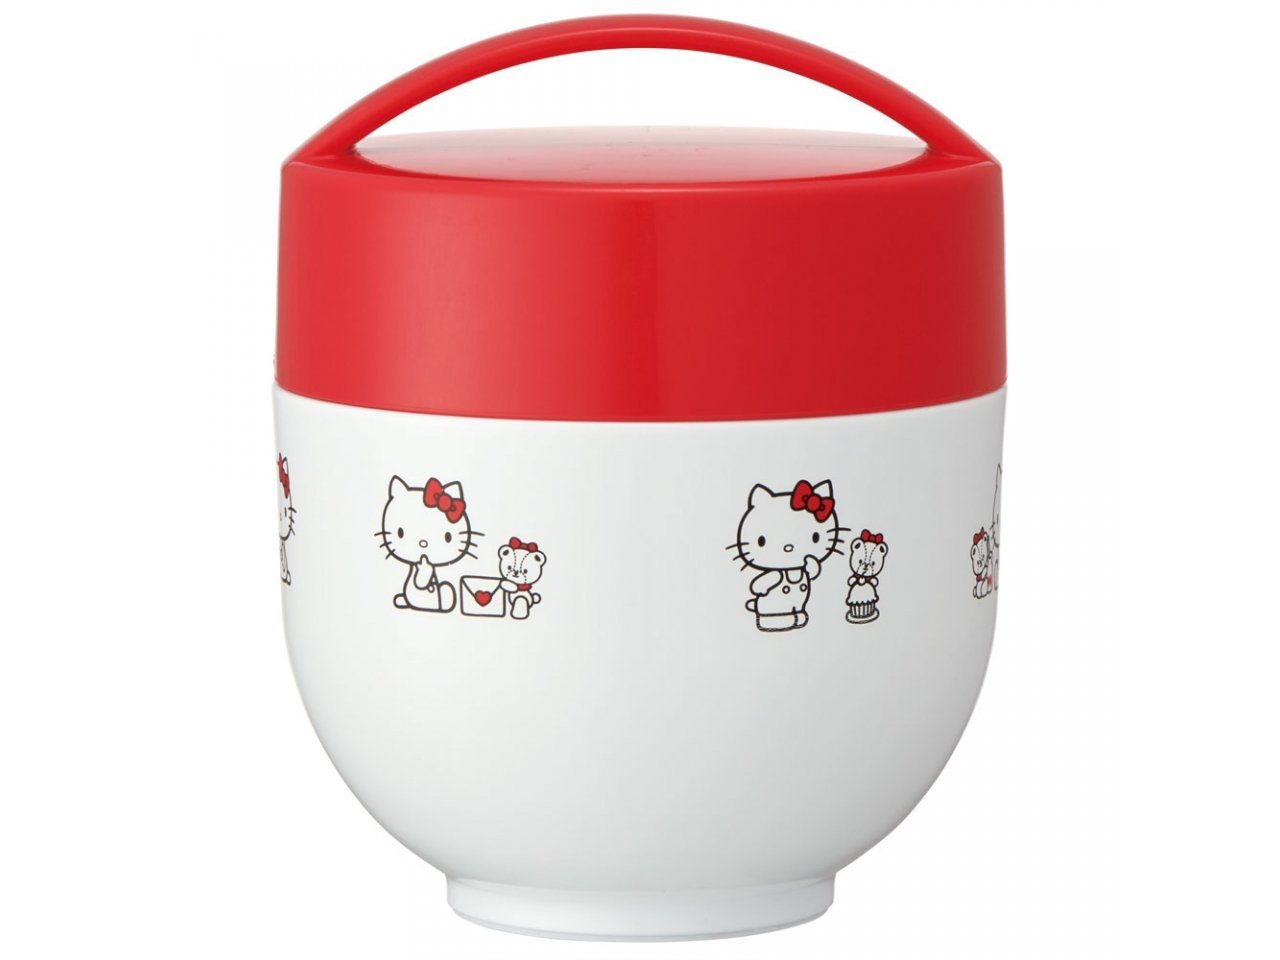 Skater Hello Kitty Domburi Lunch Vacuum Jar 540ml